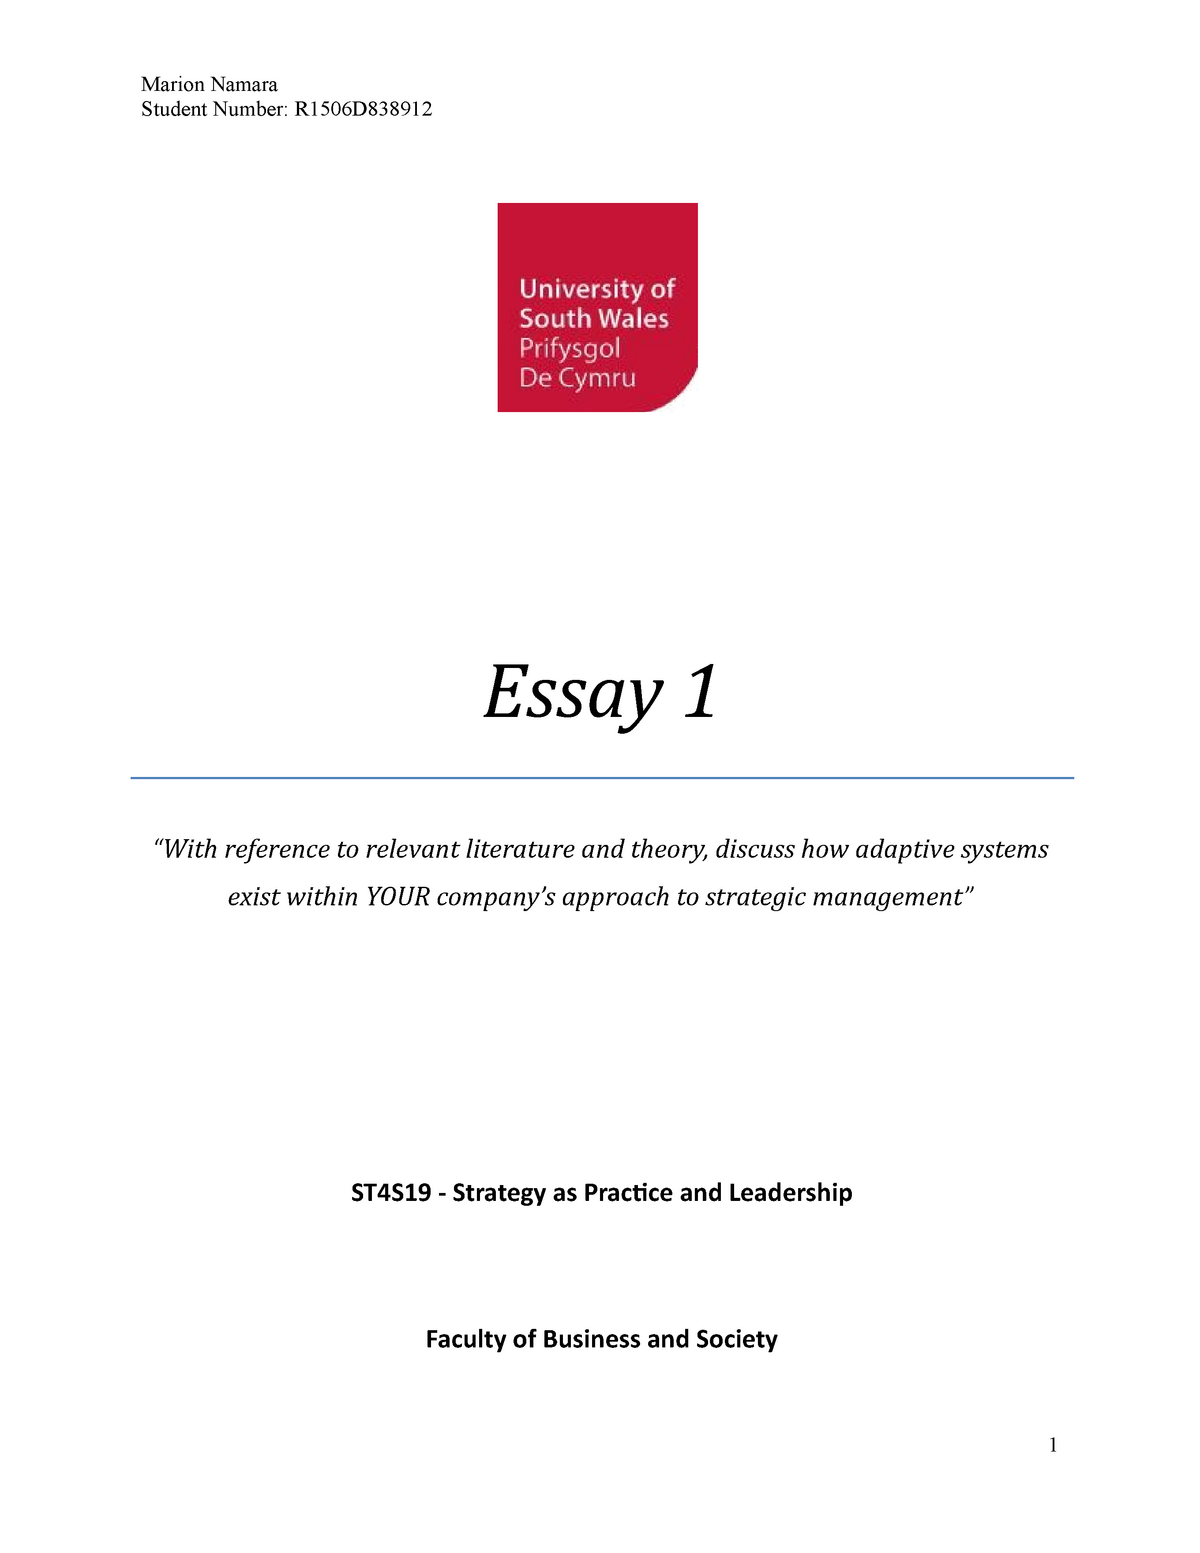 introduction to strategic management essay